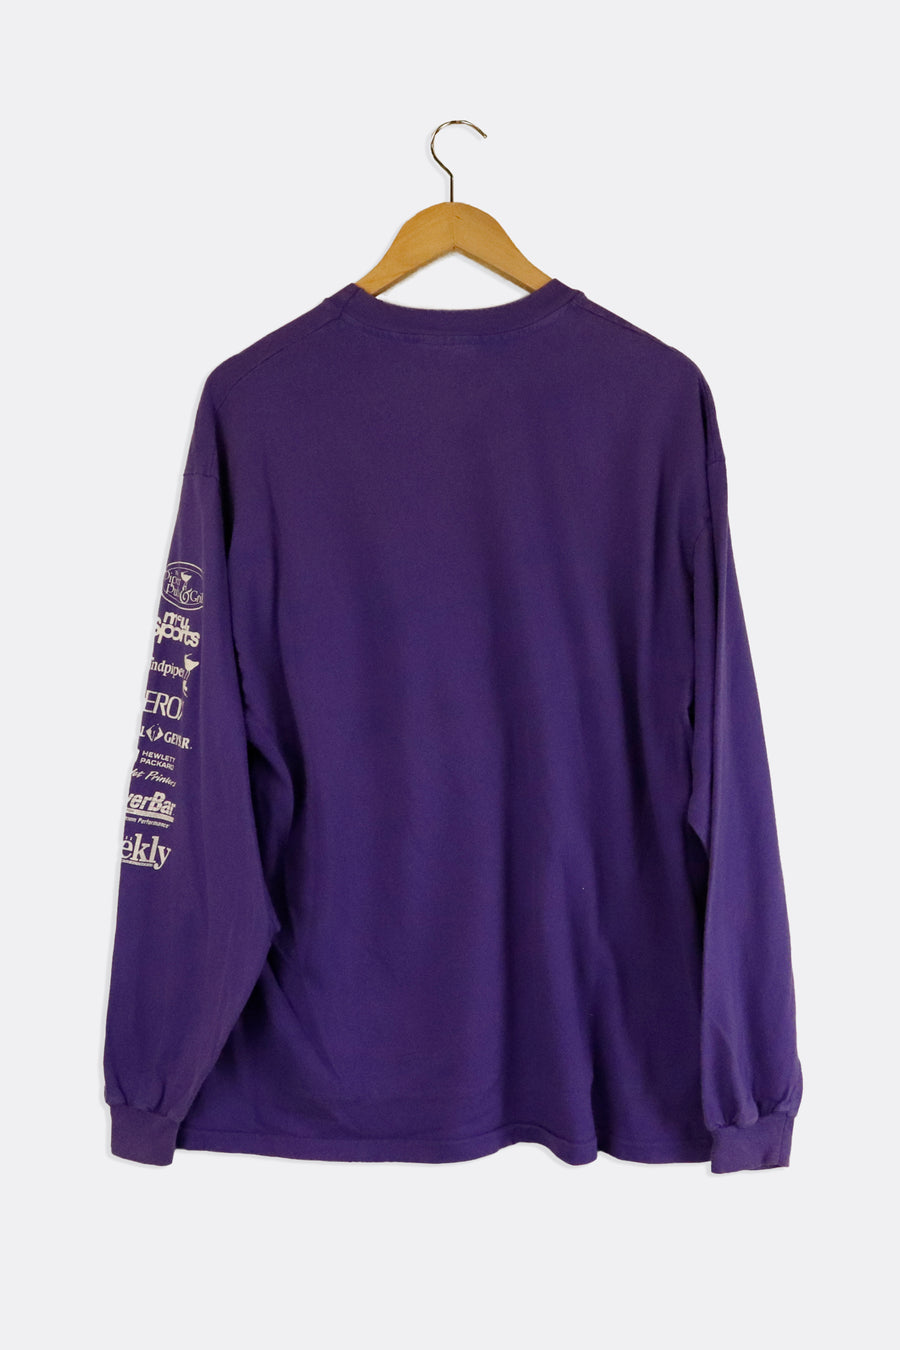 Vintage 1994 Midsummer Nights Run Idaho Longsleeve T Shirt Sz XL